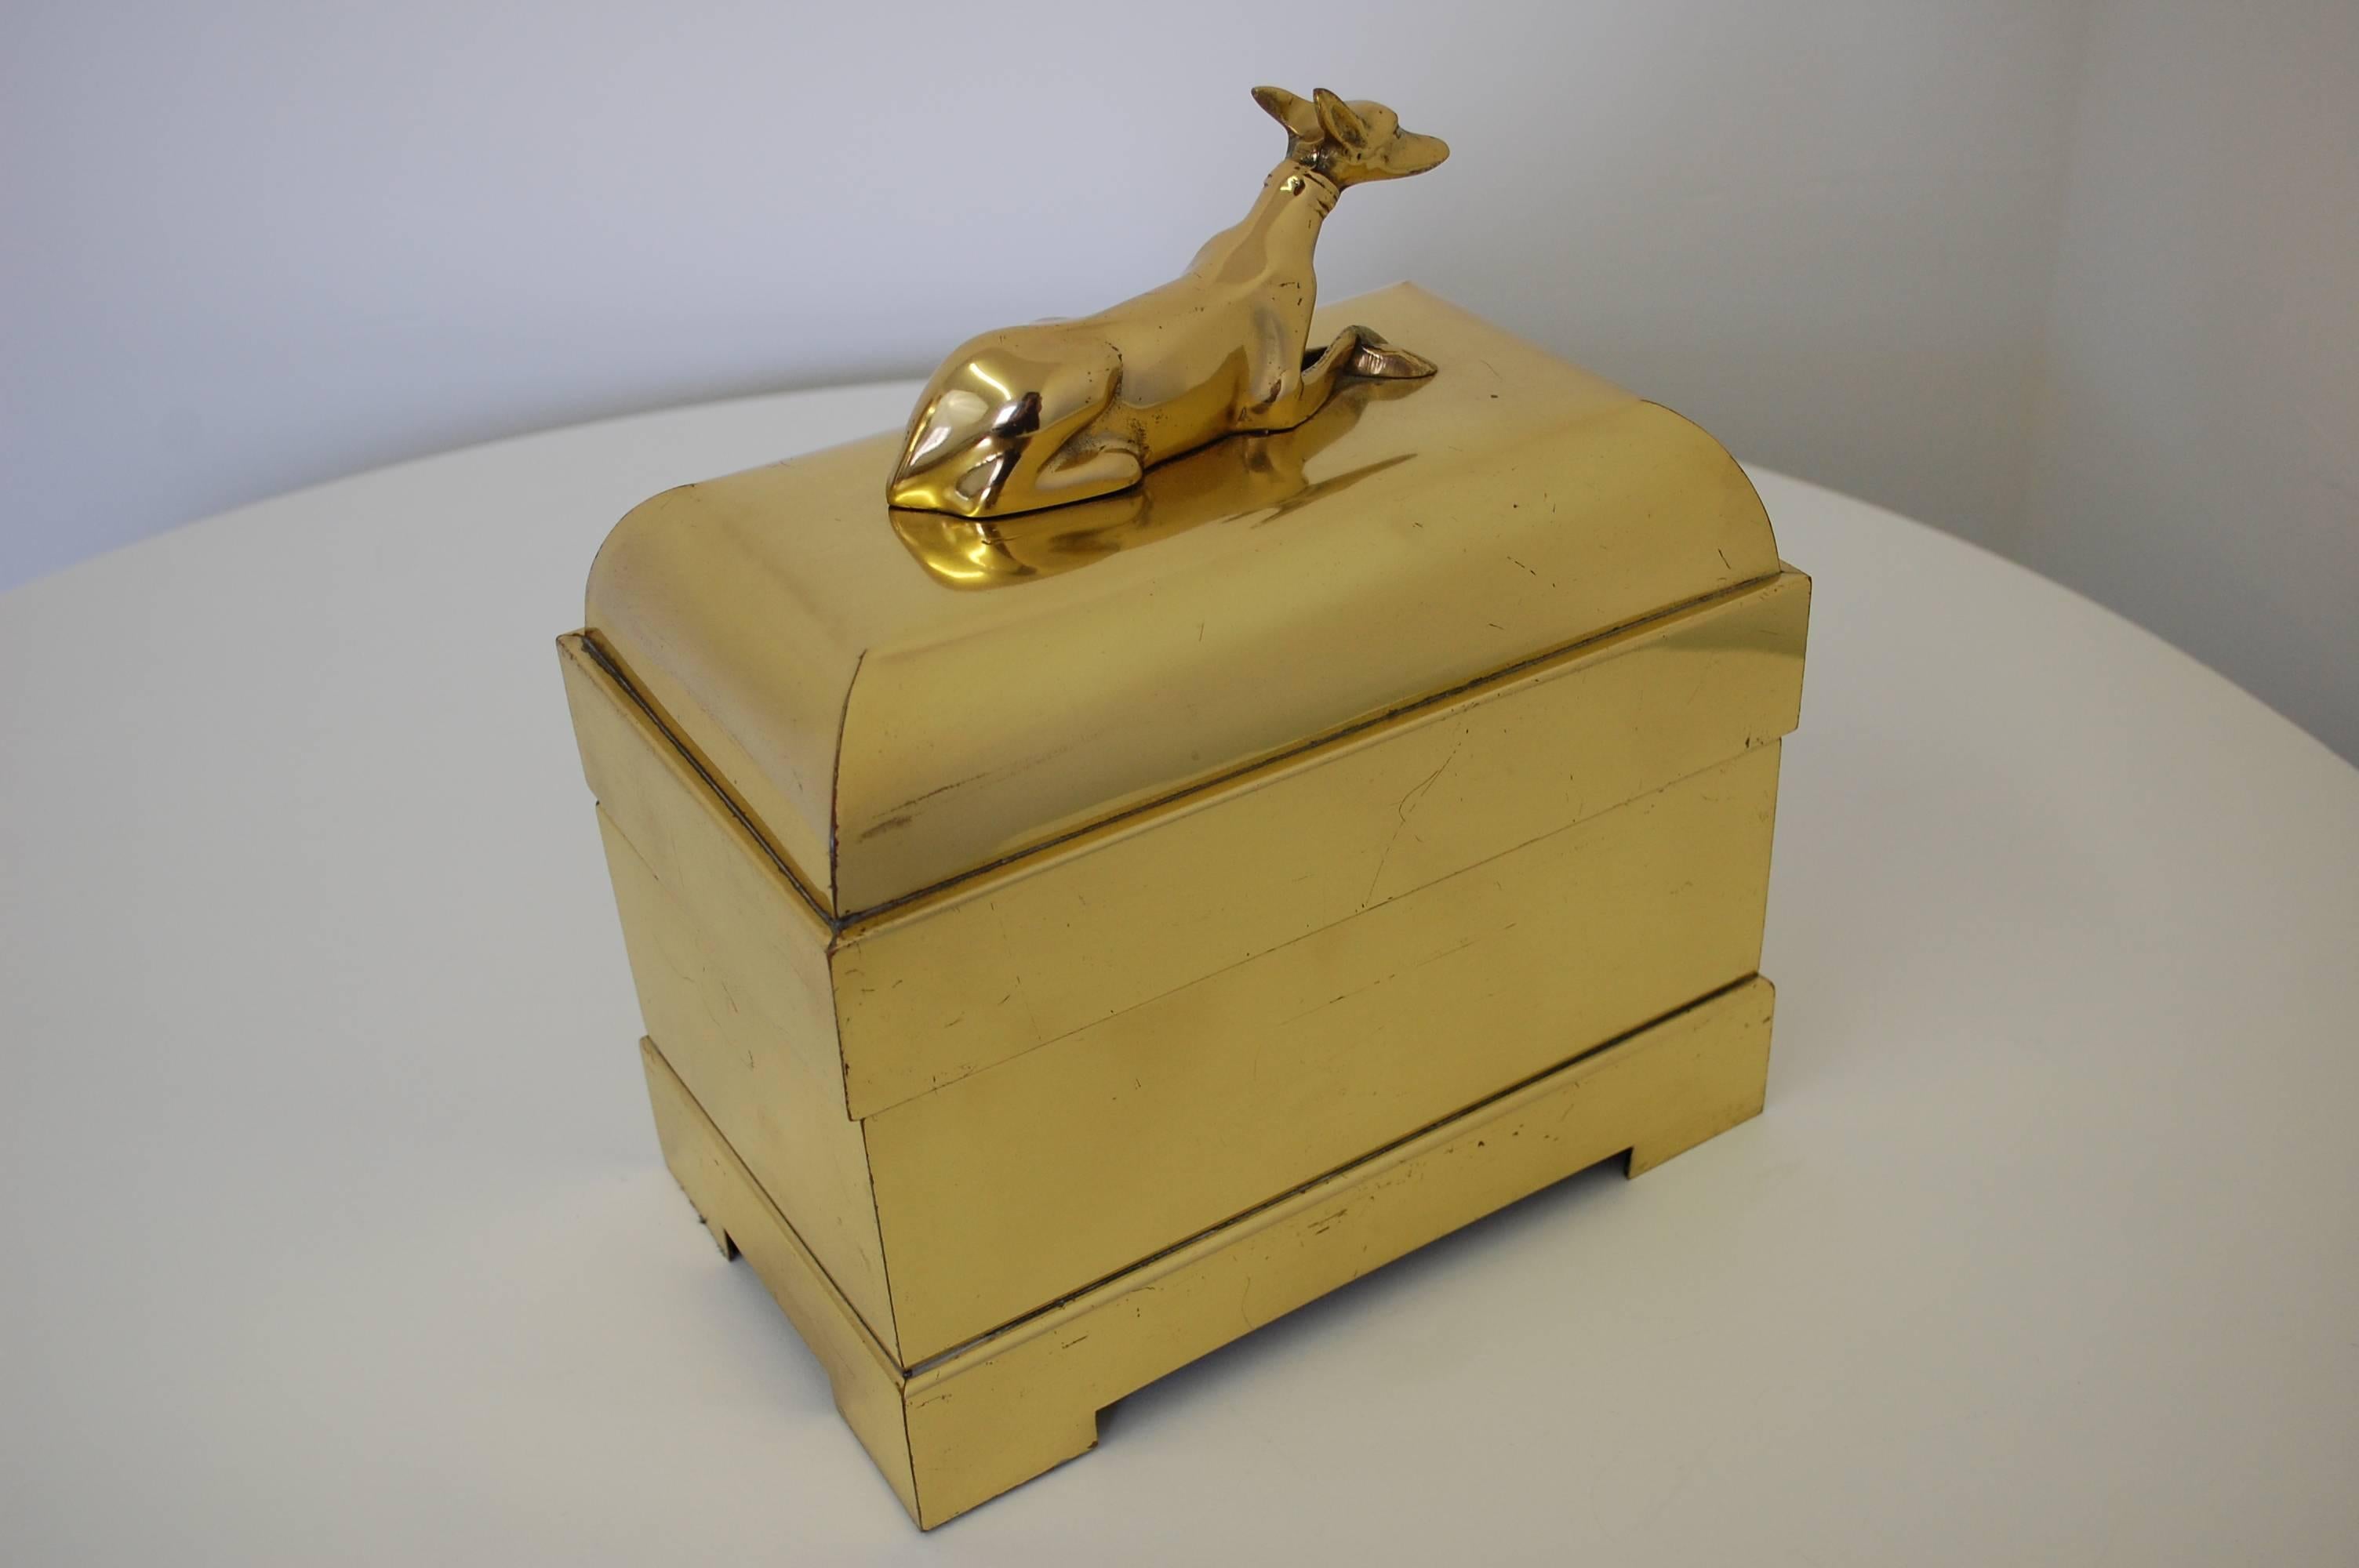 Fabulous vintage lidded brass decorative box with a greyhound figurine handle. Black velvet lined interior. Original company stamp under base.